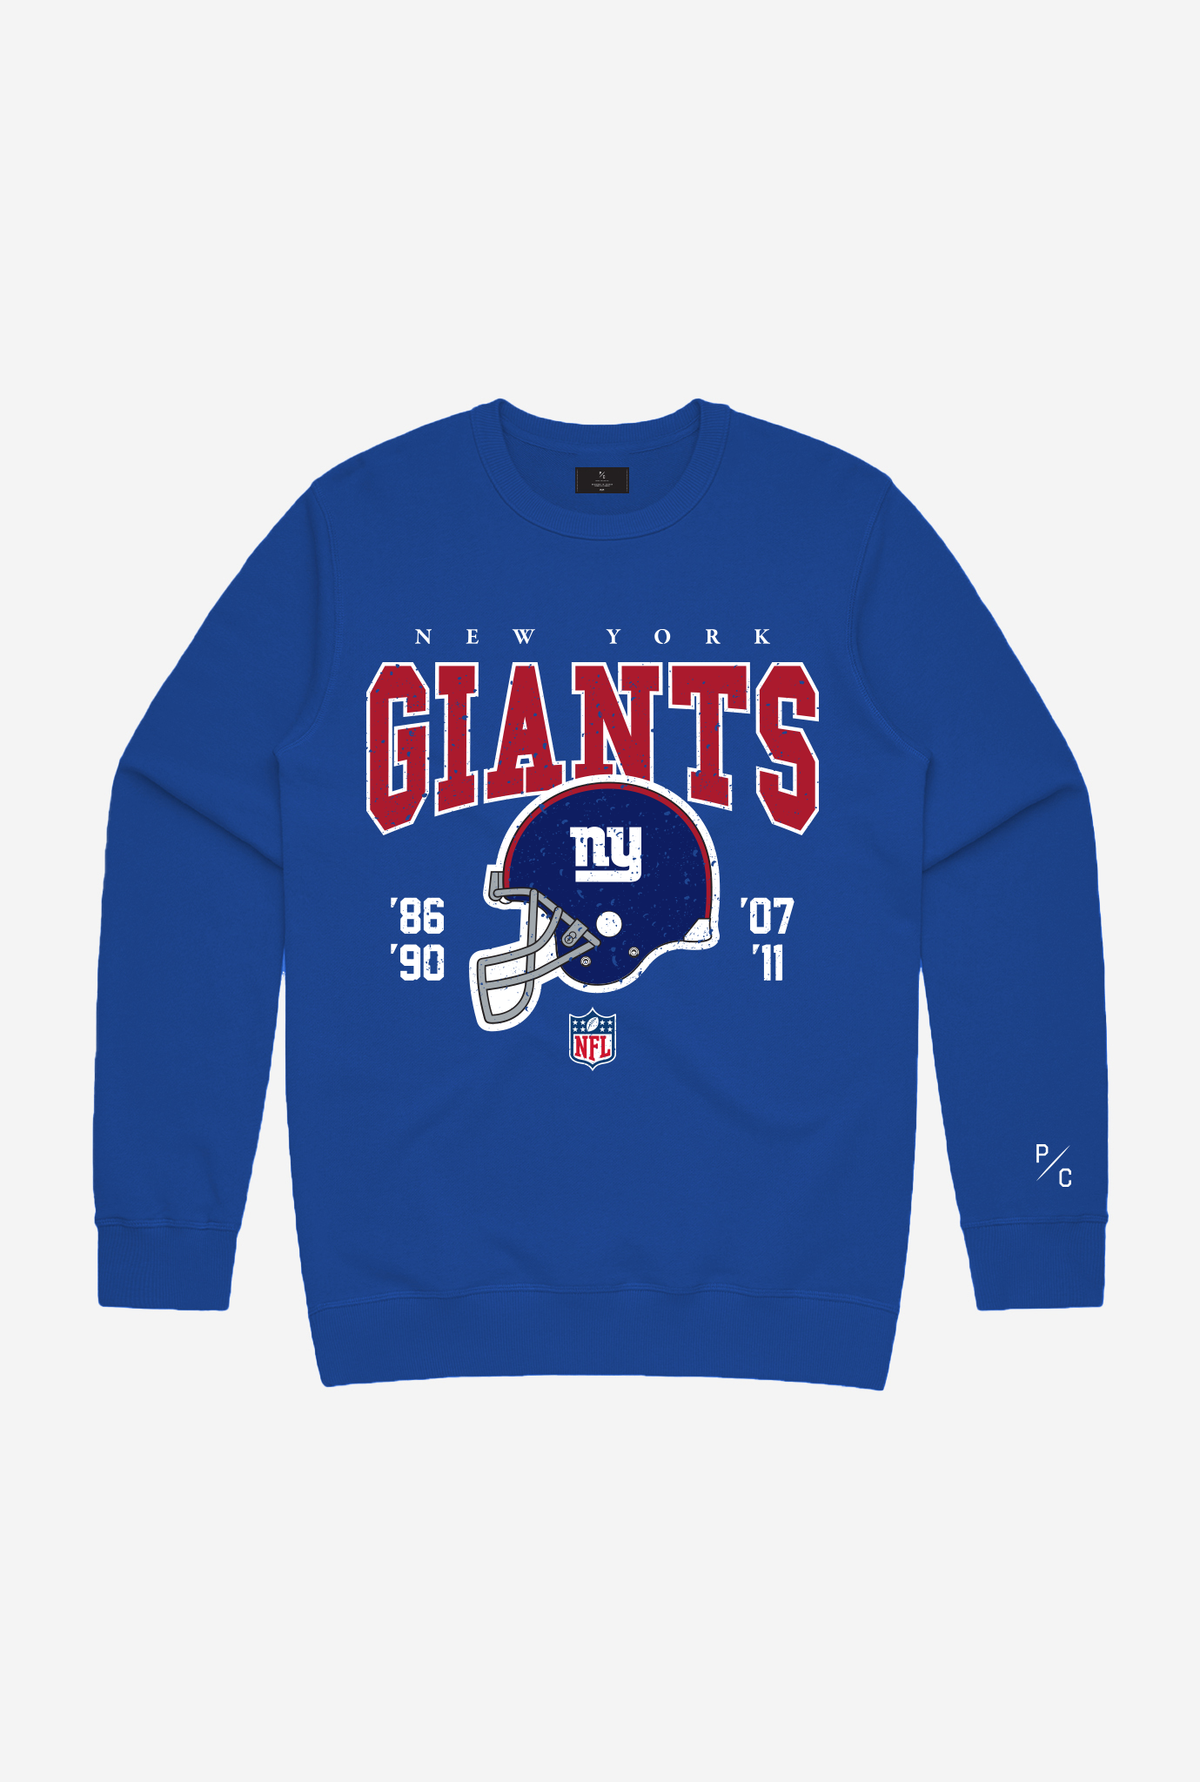 New York Giants Vintage Crewneck - Royal